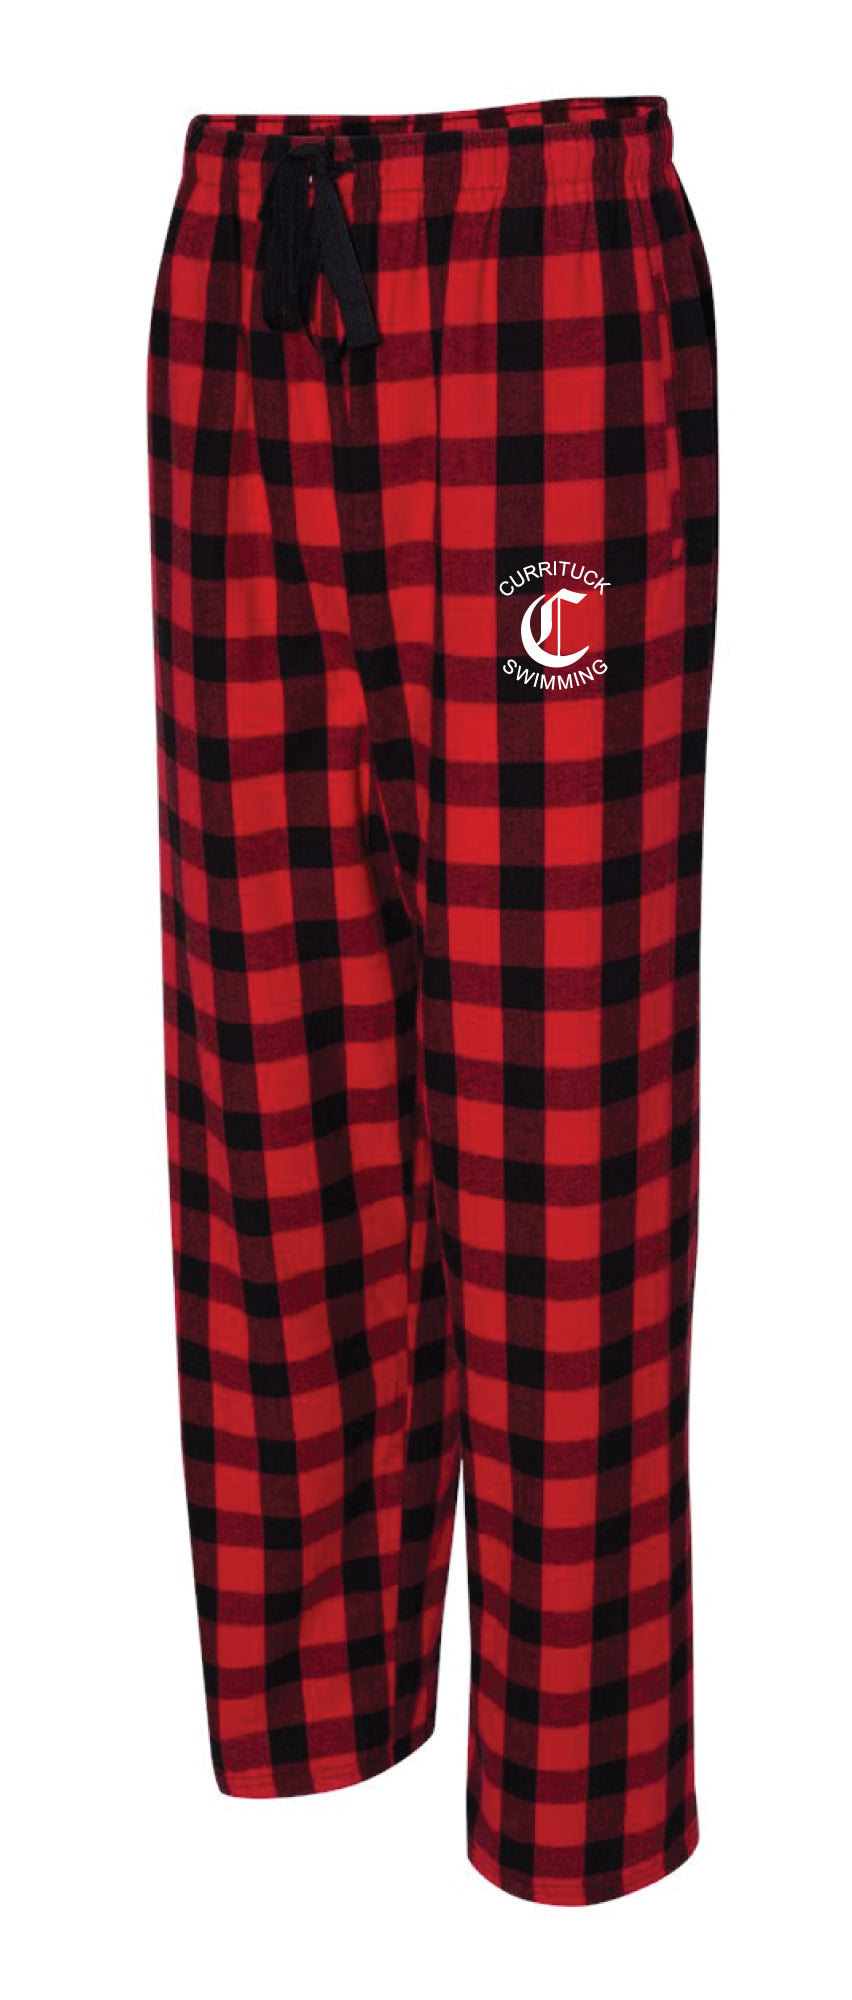 Currituck Swimming Flannel Pajama Pants -Red/Black